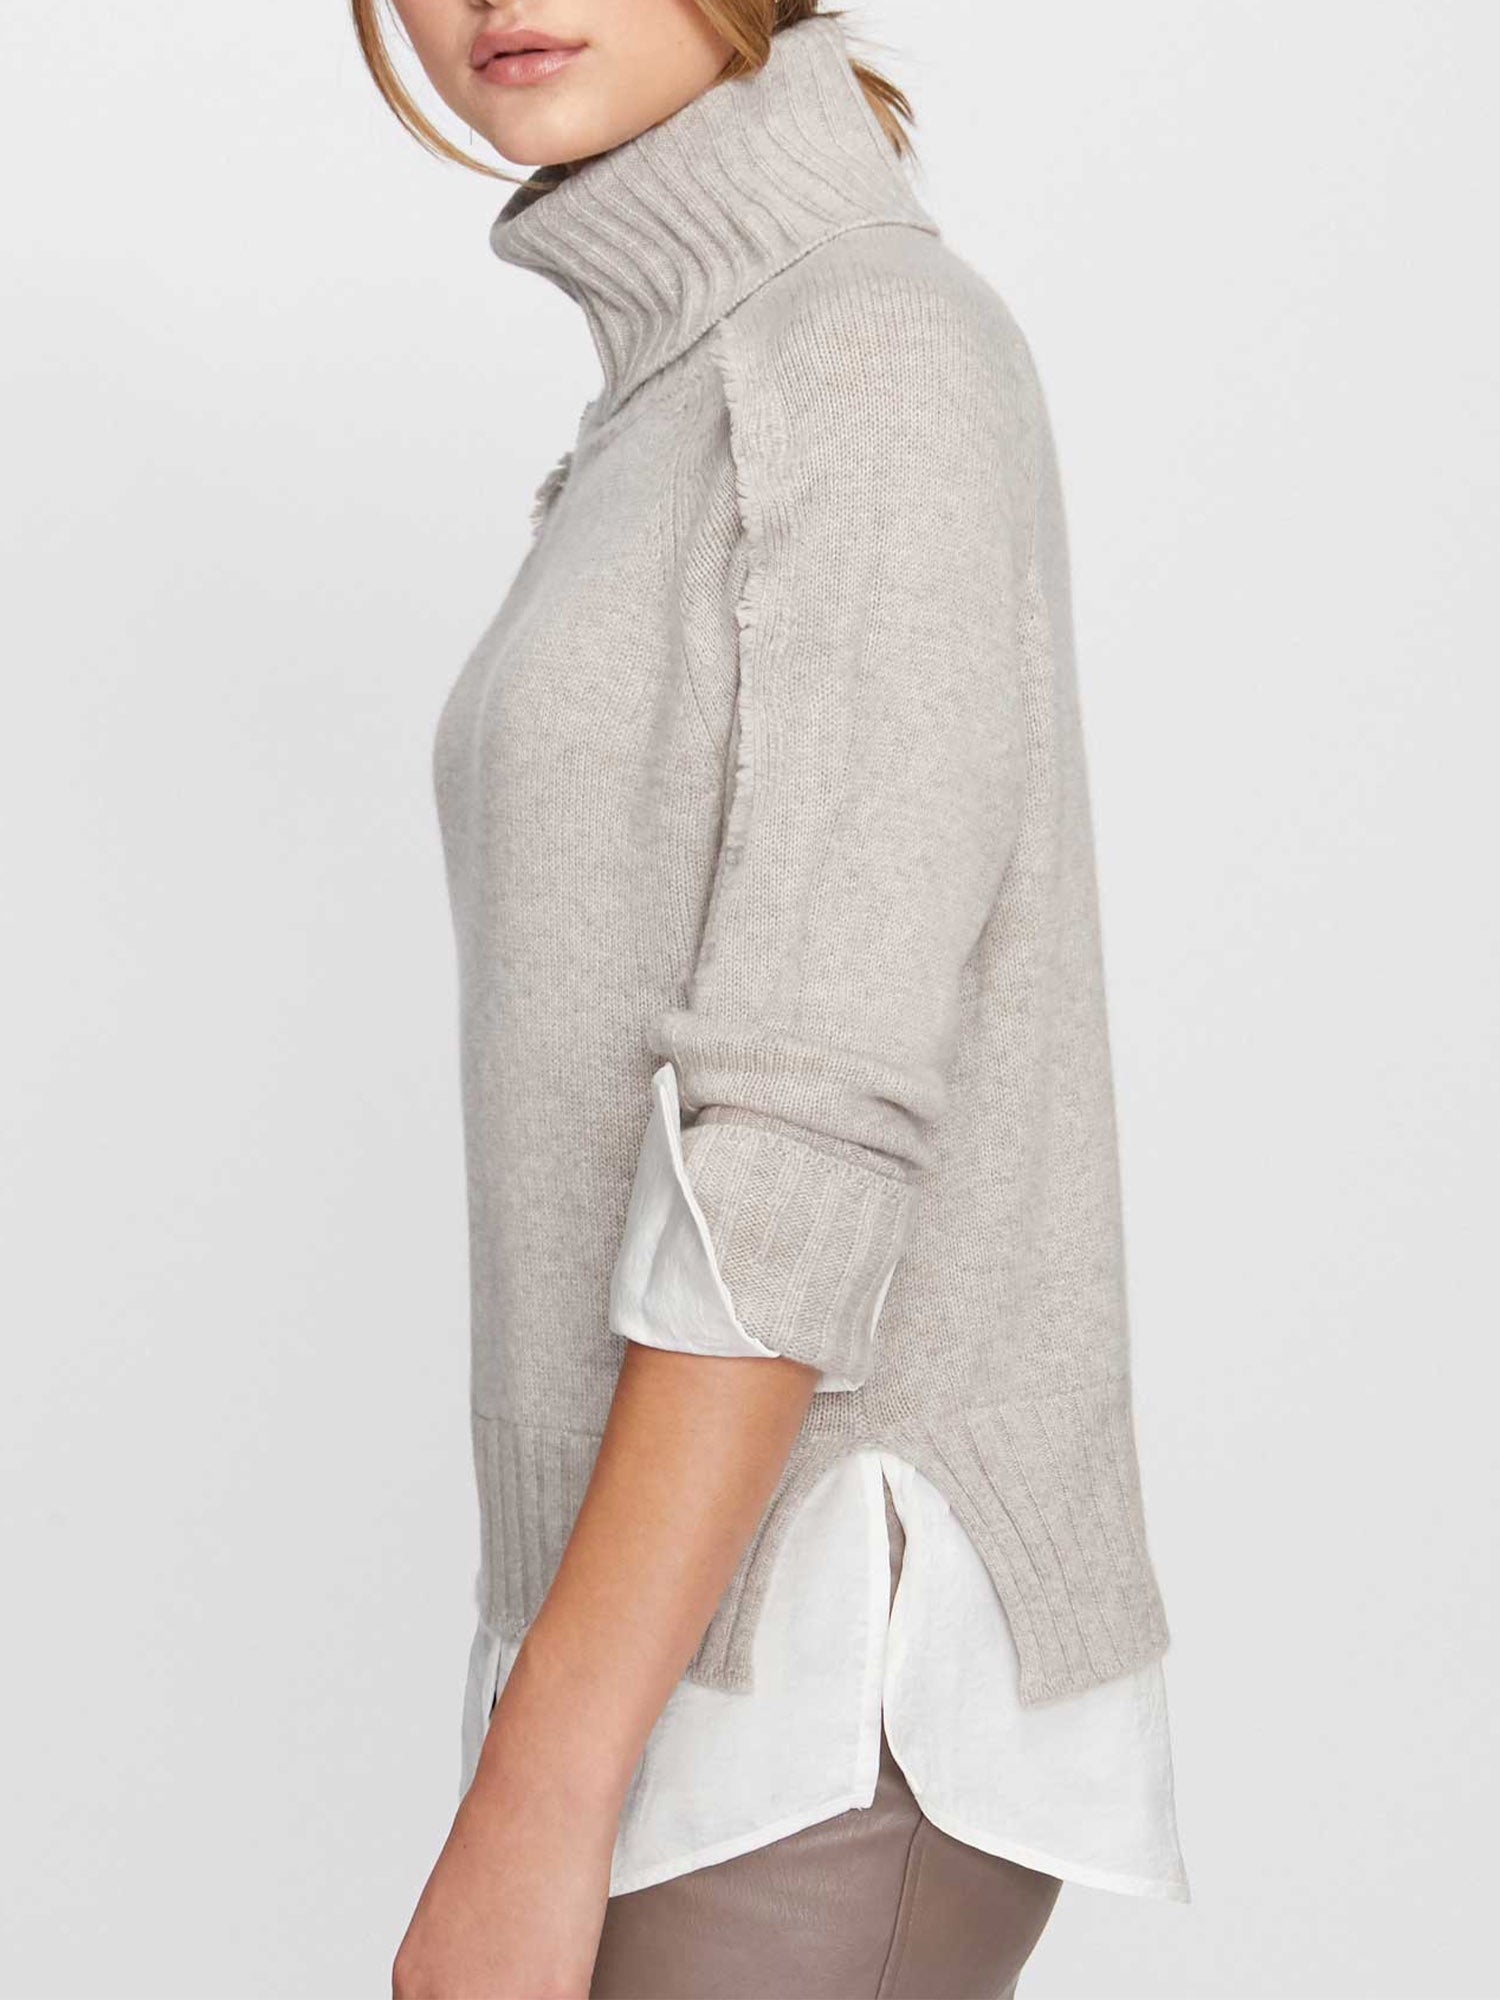 Jolie light grey layered turtleneck sweater side view